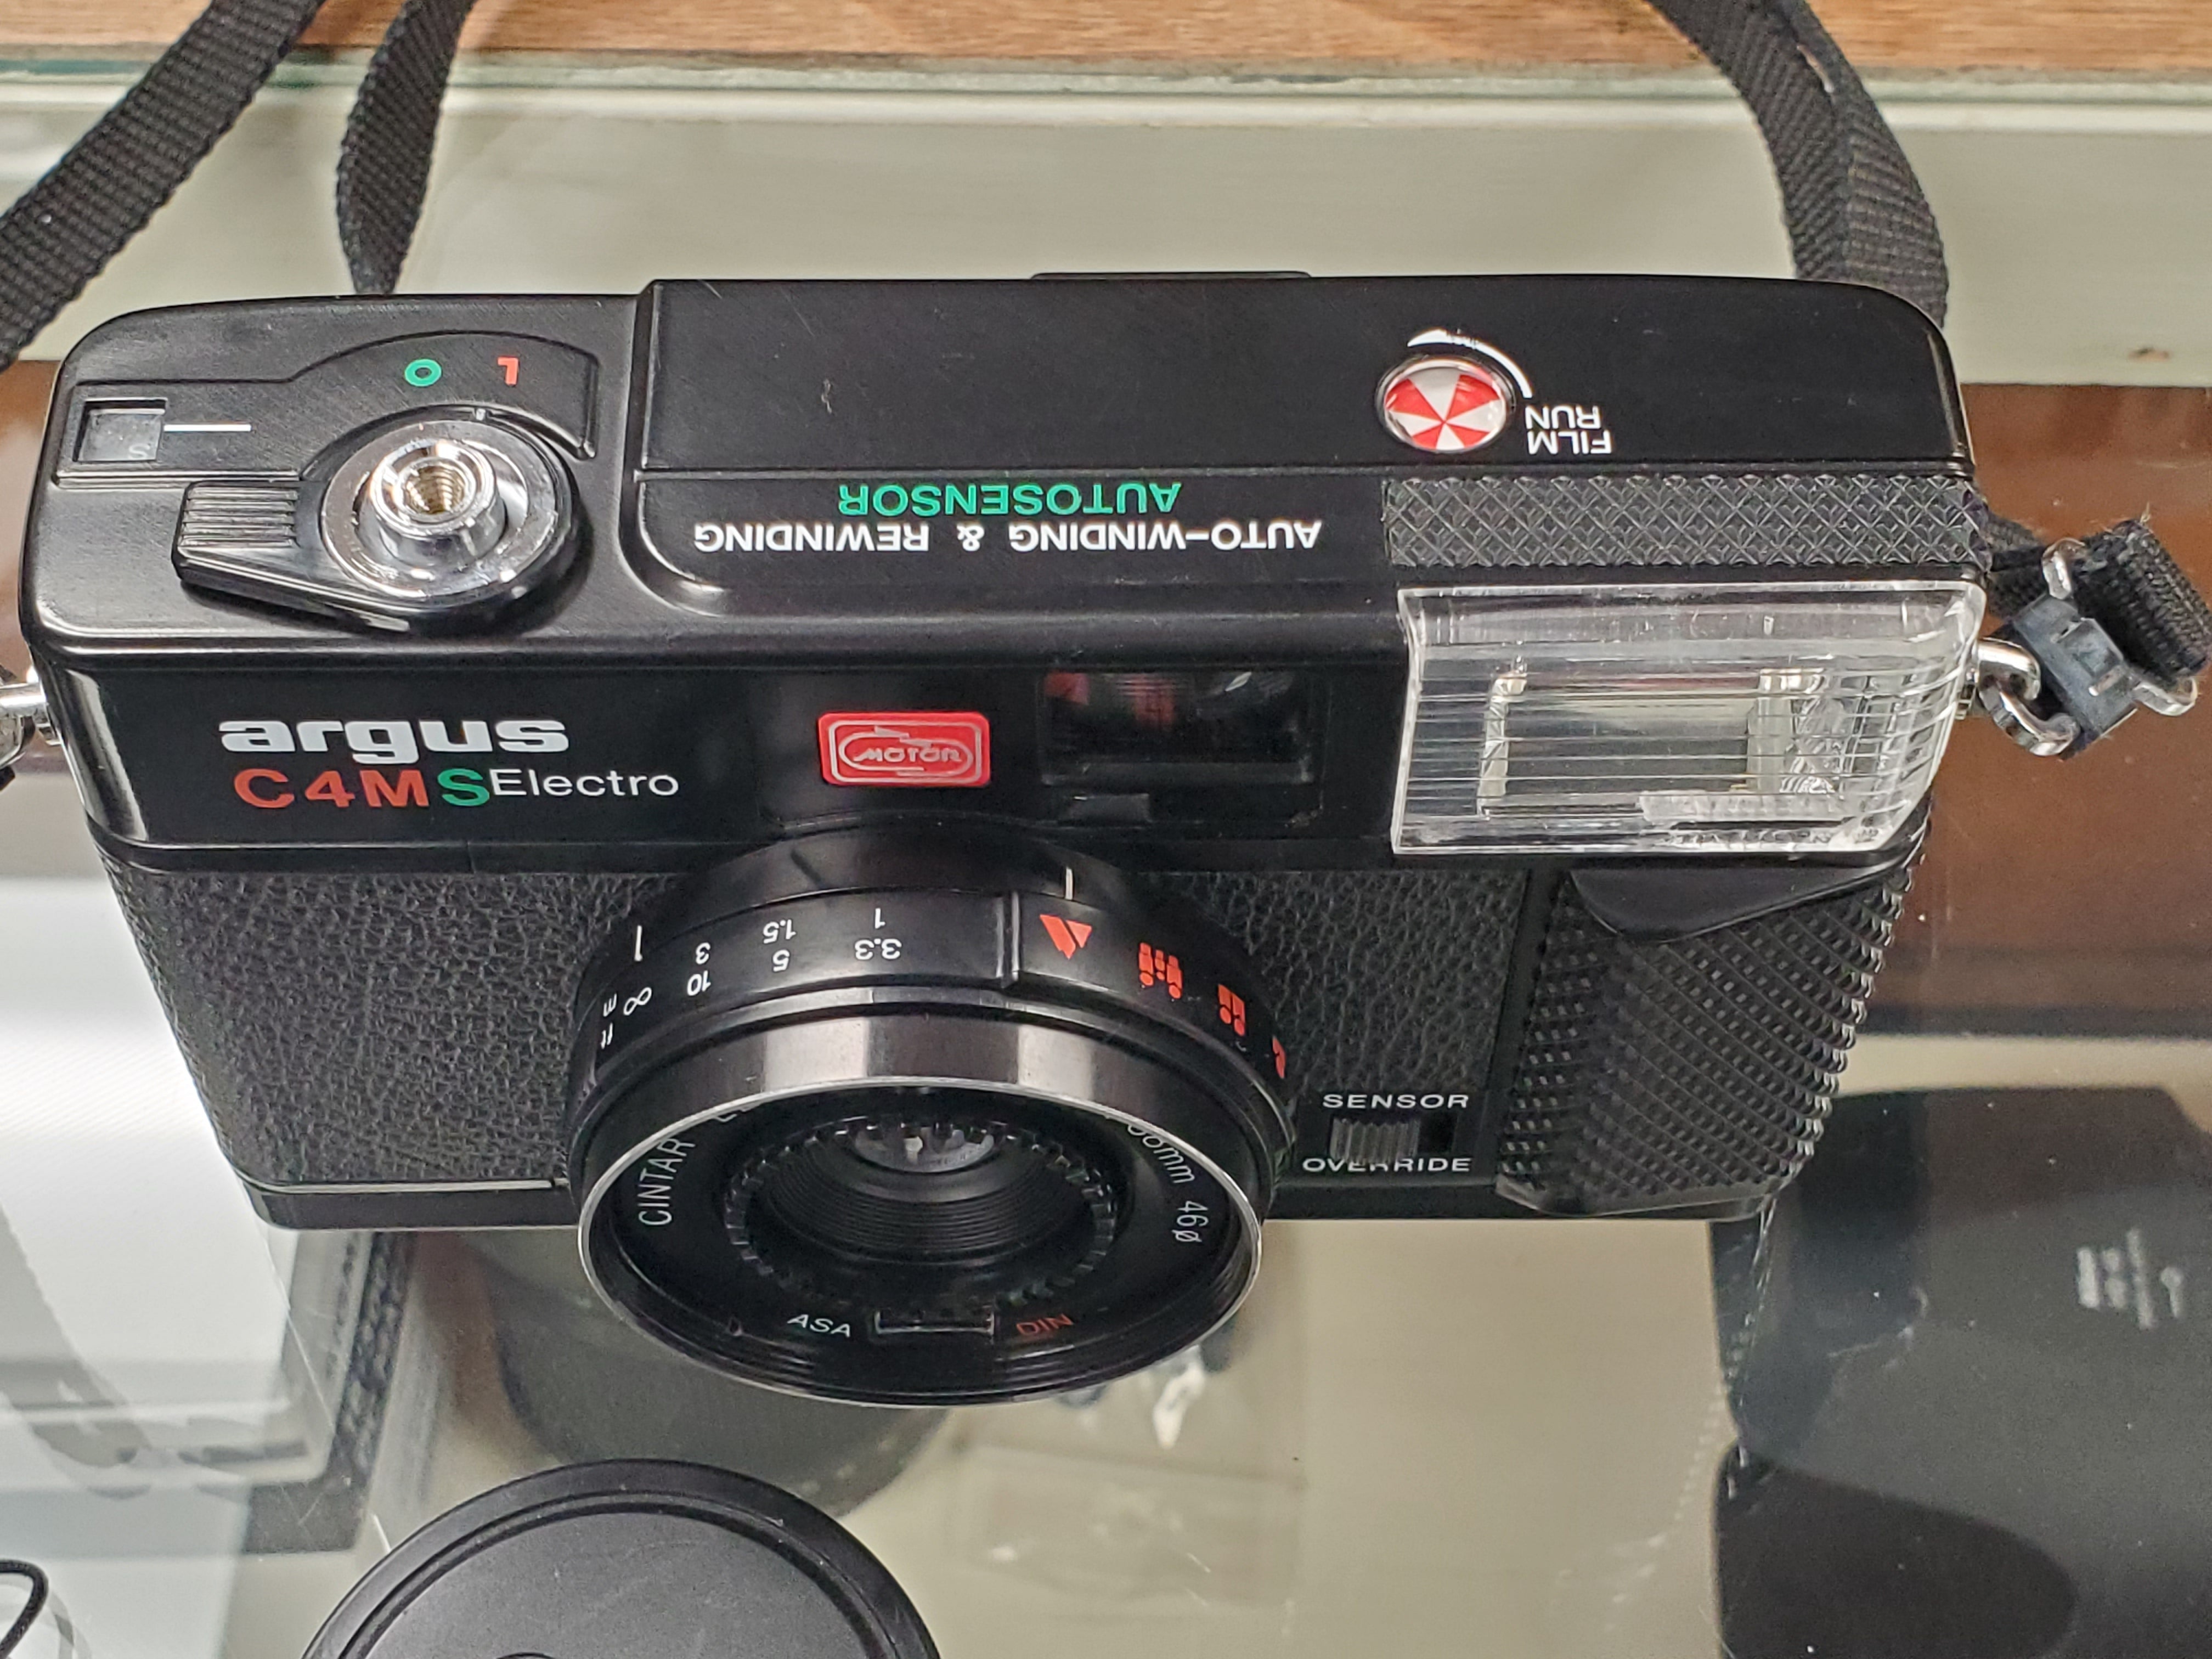 RARE Argus C4MS Electro, 38mm 3.8 lens, Point & Shoot, CLA, Light Seals, Canada - Paramount Camera & Repair